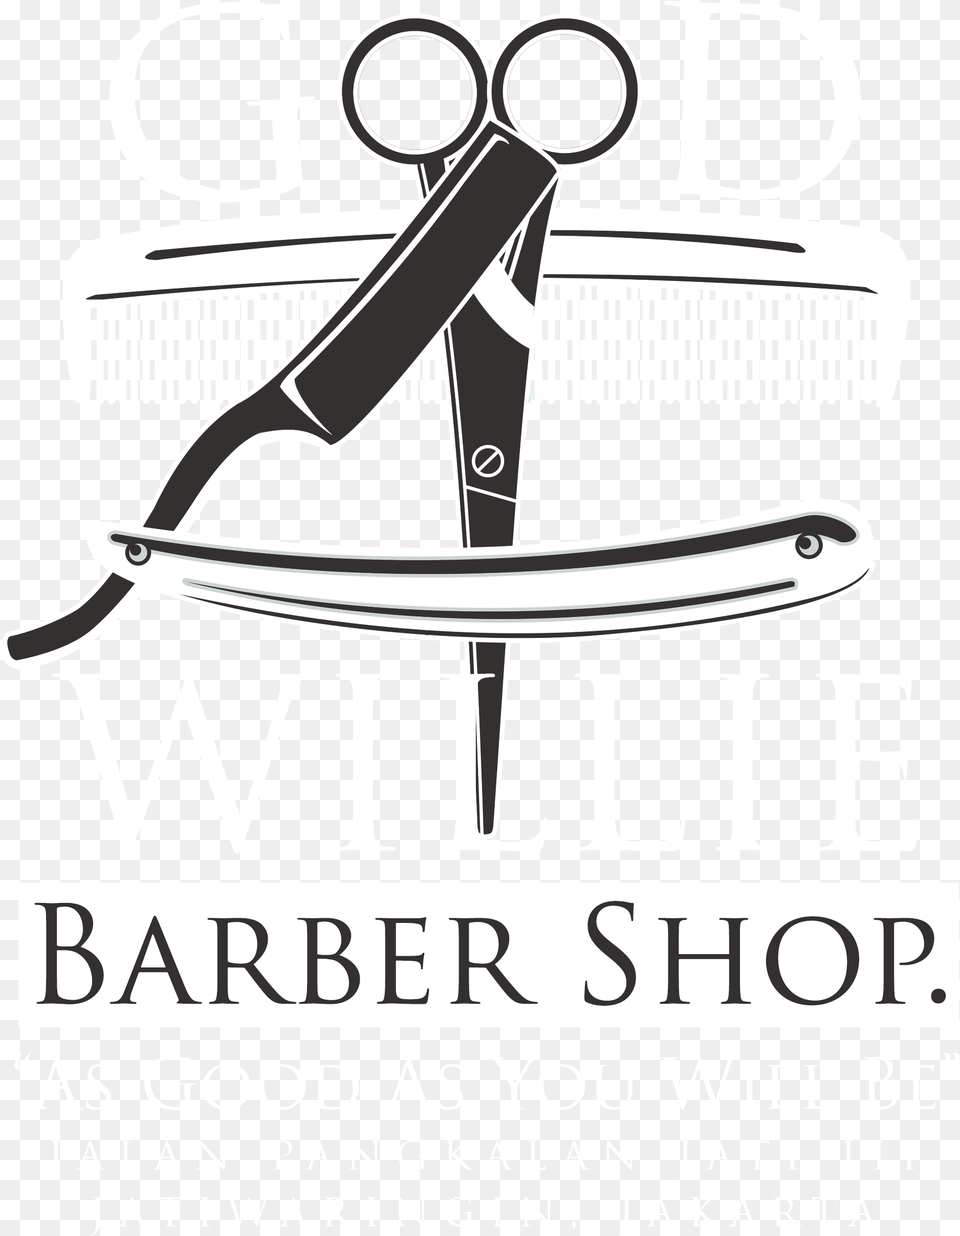 Source Static Tumblr Com Report Barber Shop Good Willie Barber Shop, Blade, Razor, Weapon, Advertisement Png